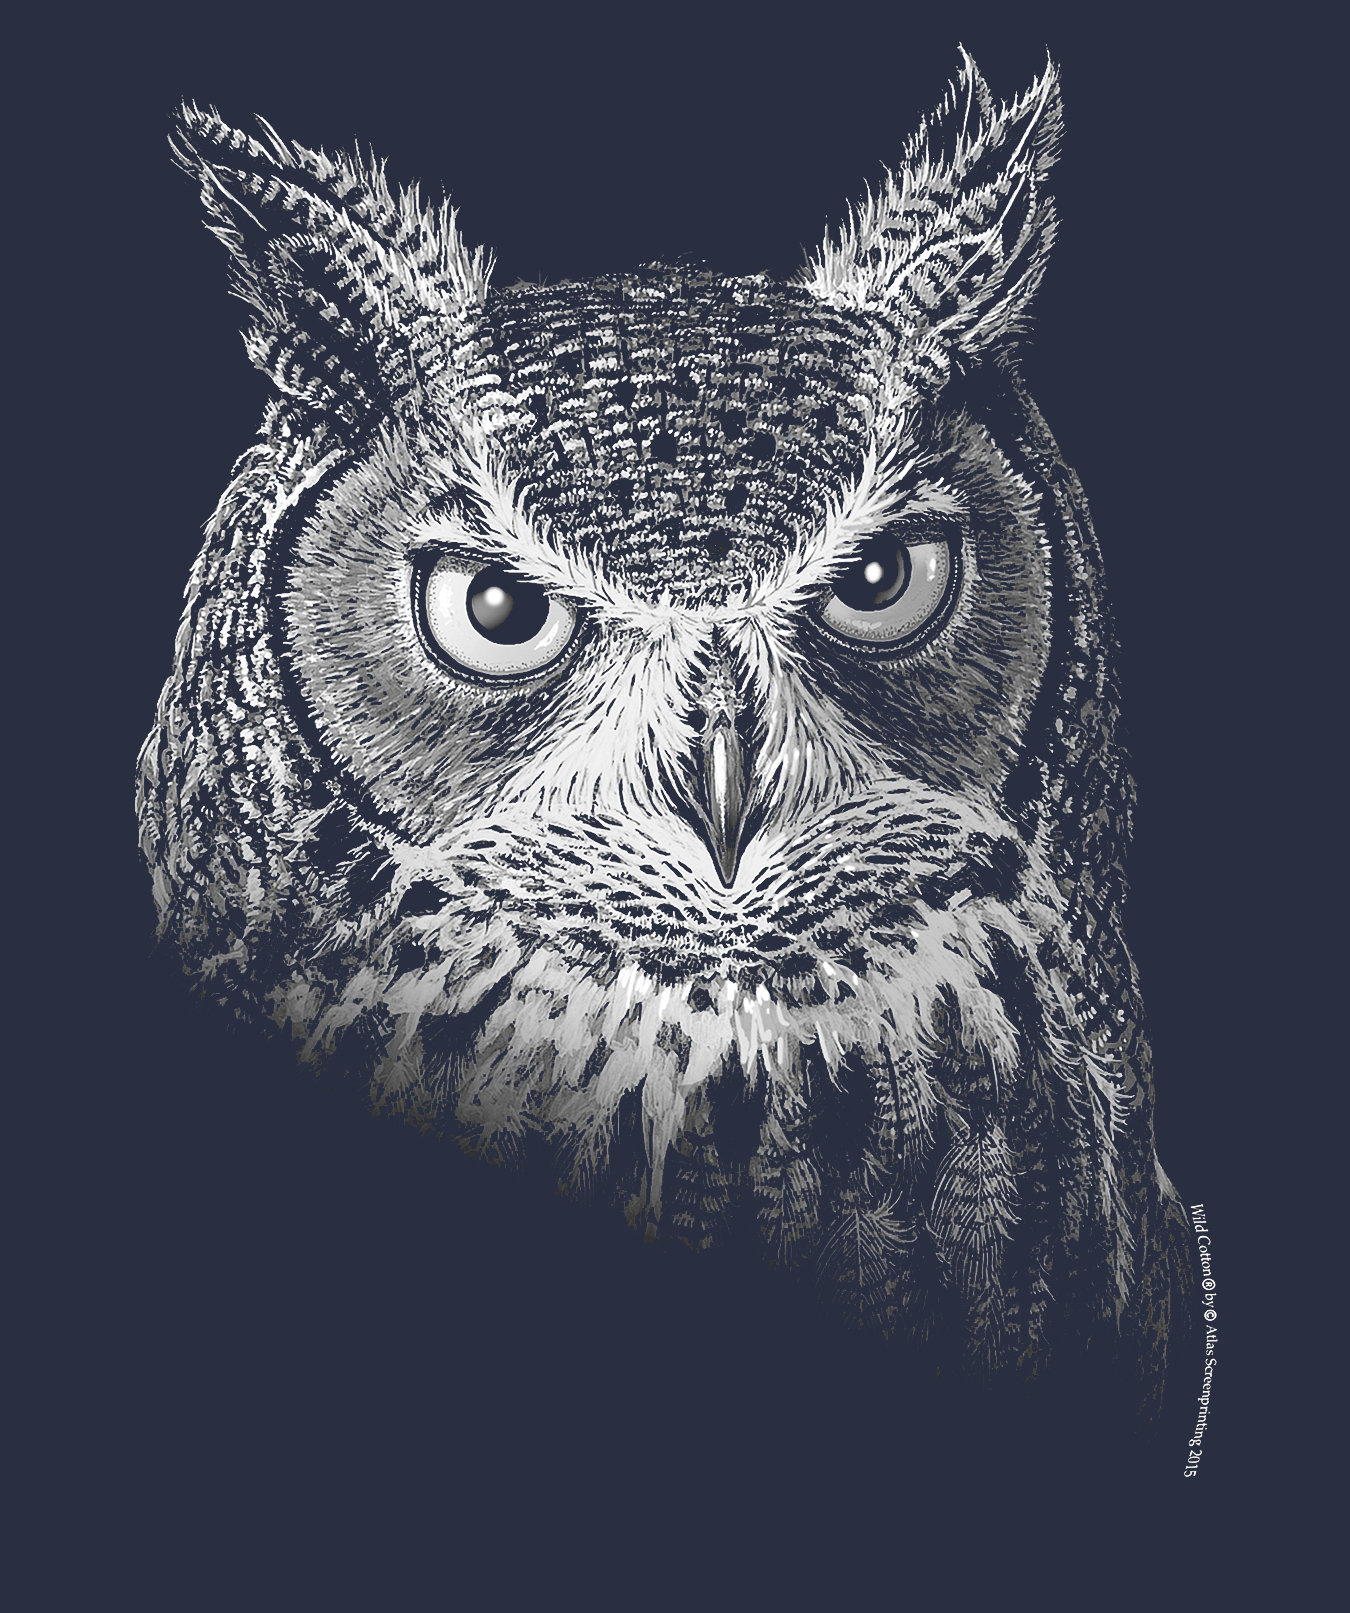 Youth Owl Portrait T-Shirt